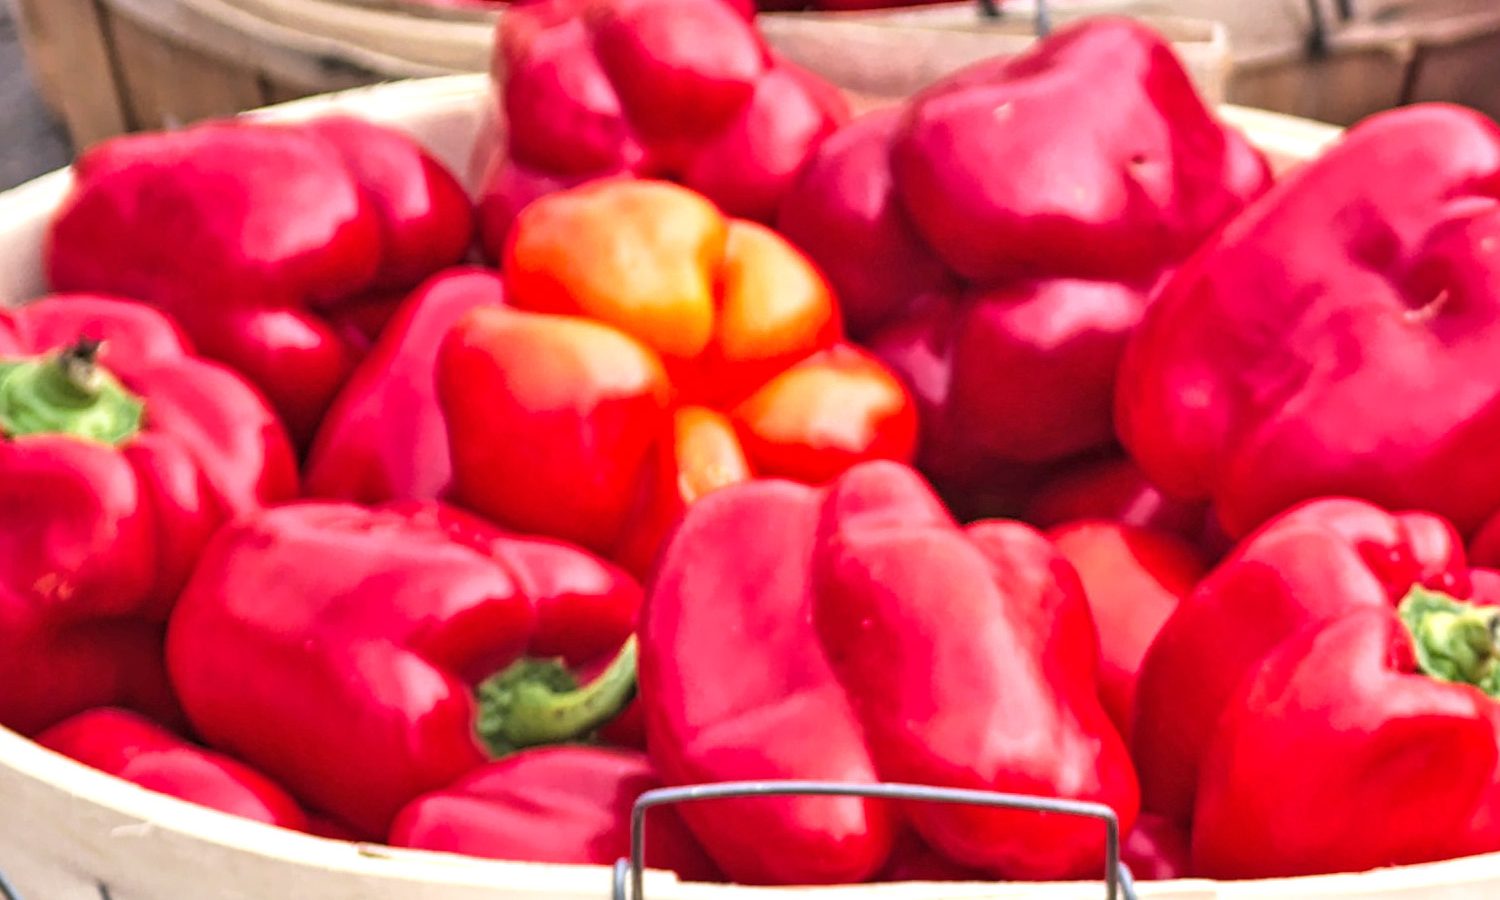 Garden fresh sweet red bell peppers in bushel basket-Friends Drift Inn Red Pepper Jelly